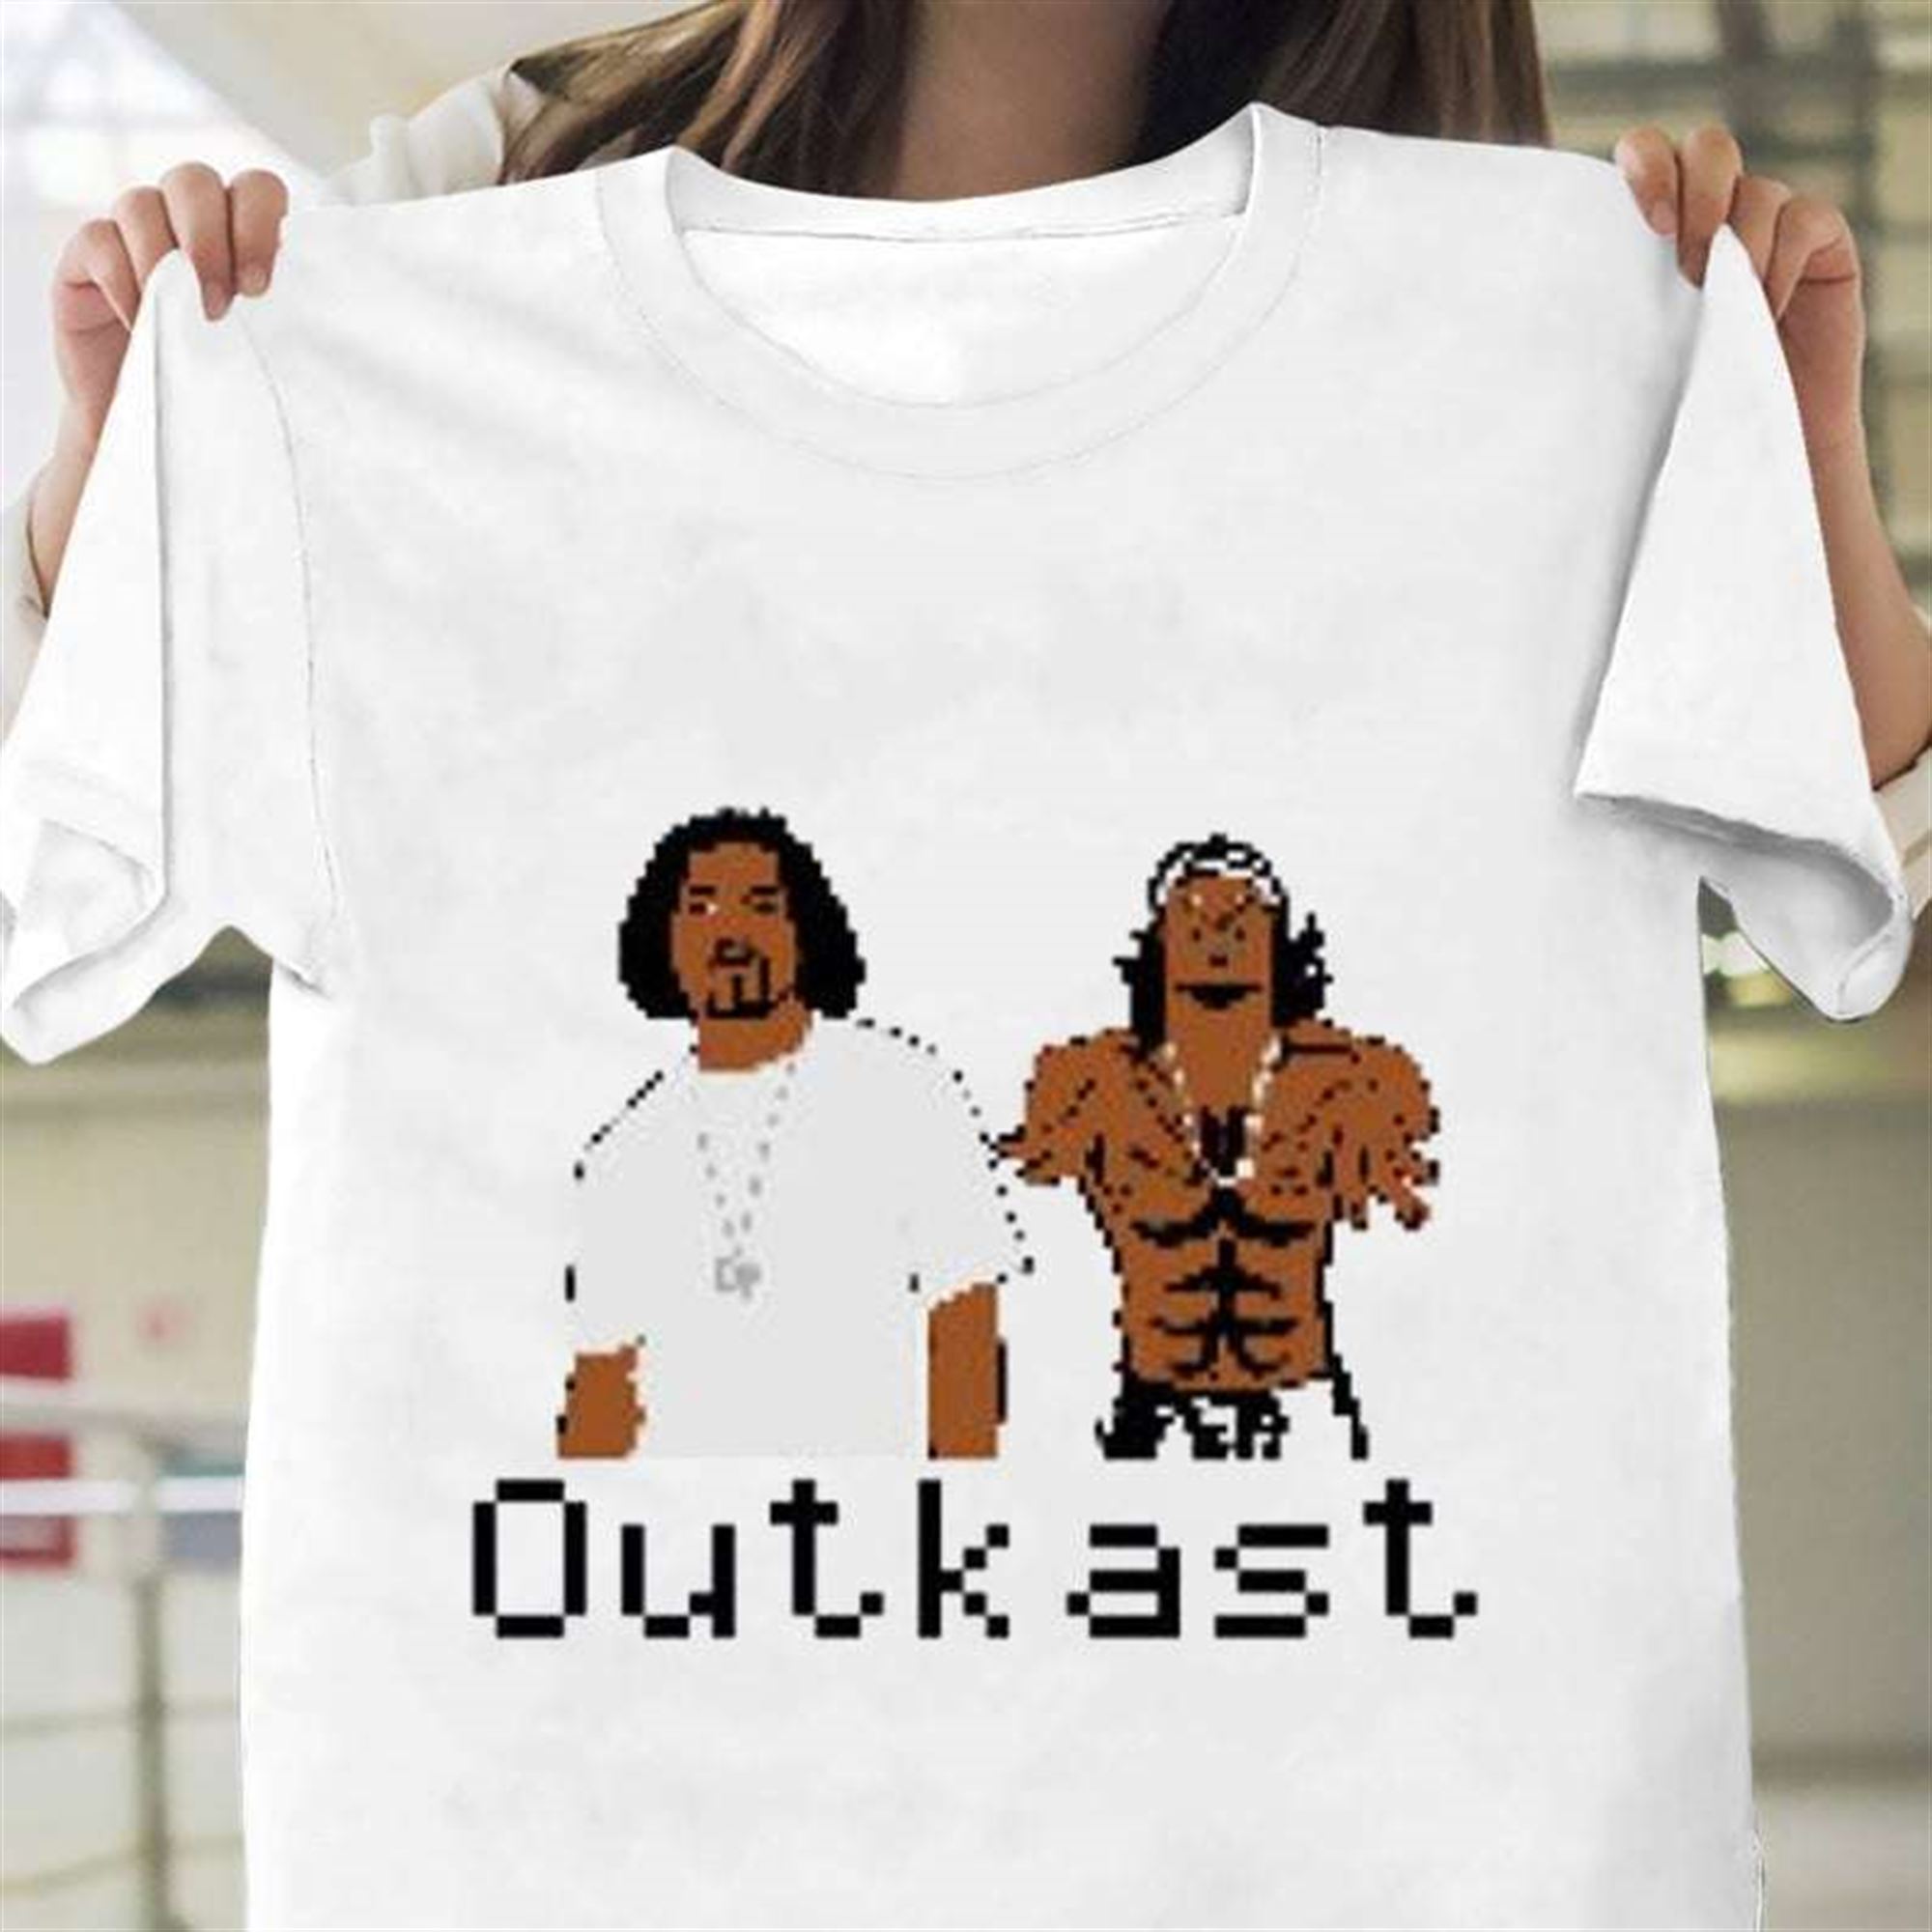 Outkast Hip Hop T-shirt Size Up To 5xl